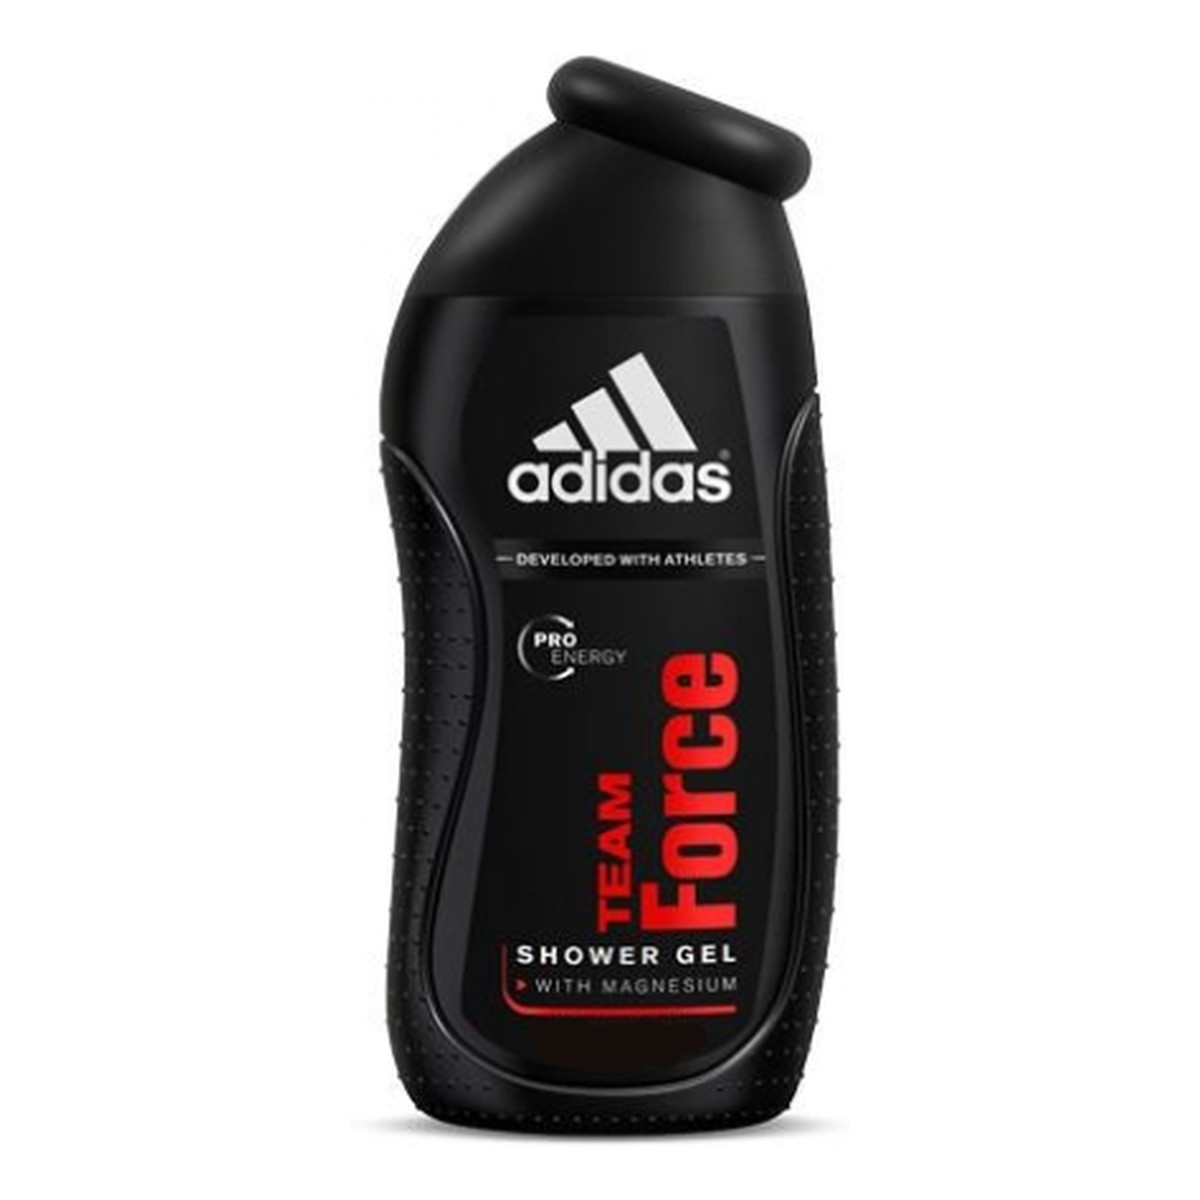 Adidas Team Force Men Żel Pod Prysznic 400ml